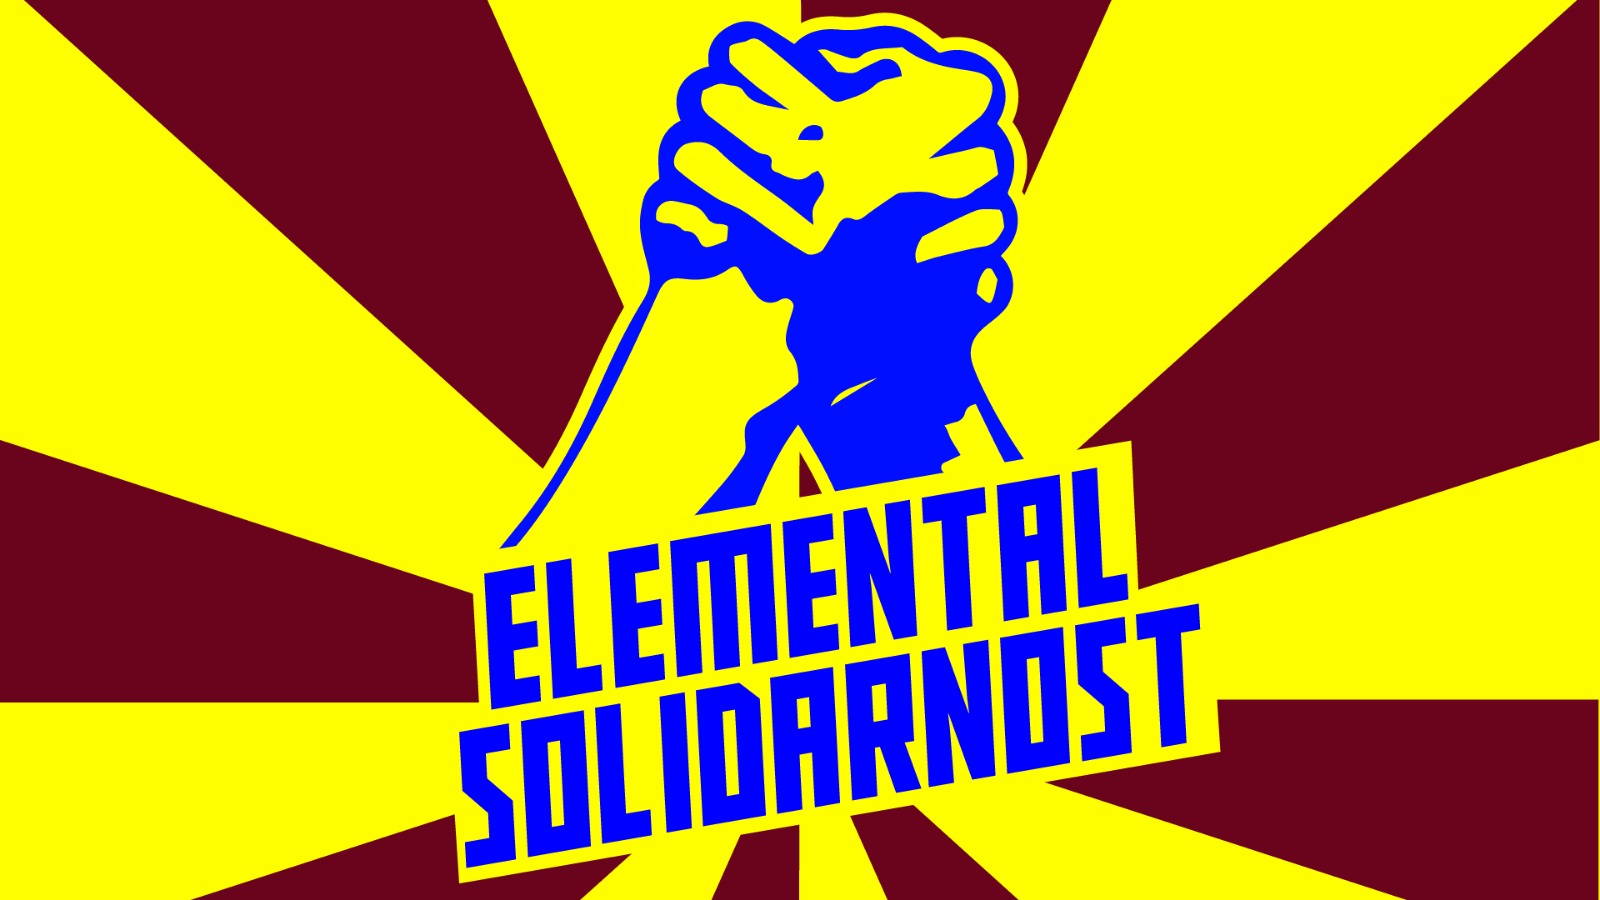 Elemental_Solidarnost